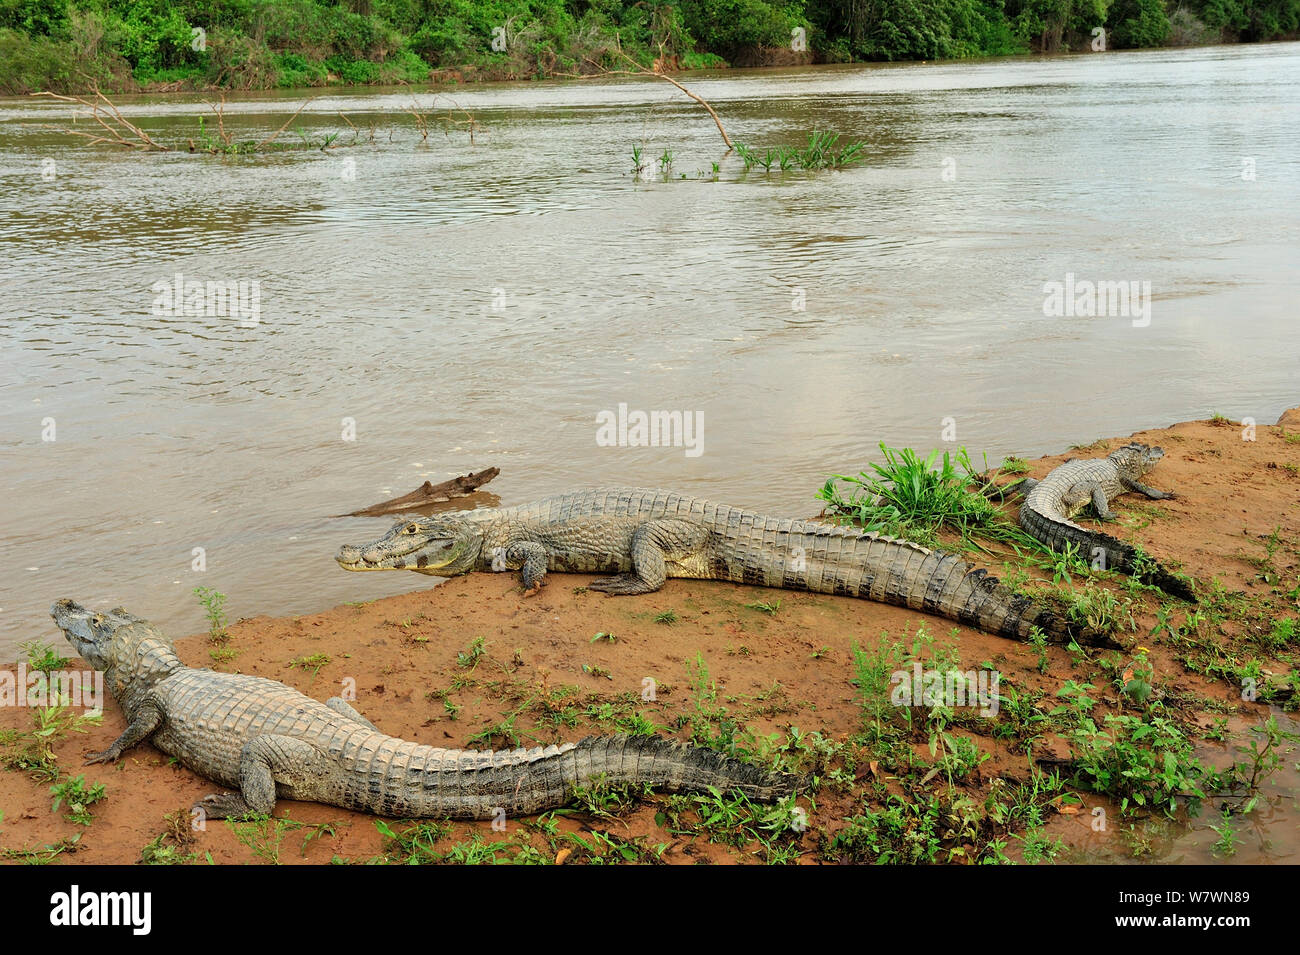 Yacare Kaimane (Caiman yacare) am Ufer des Flusses Piquiri, Pantanal von Mato Grosso, Mato Grosso, Westen Brasiliens. Stockfoto